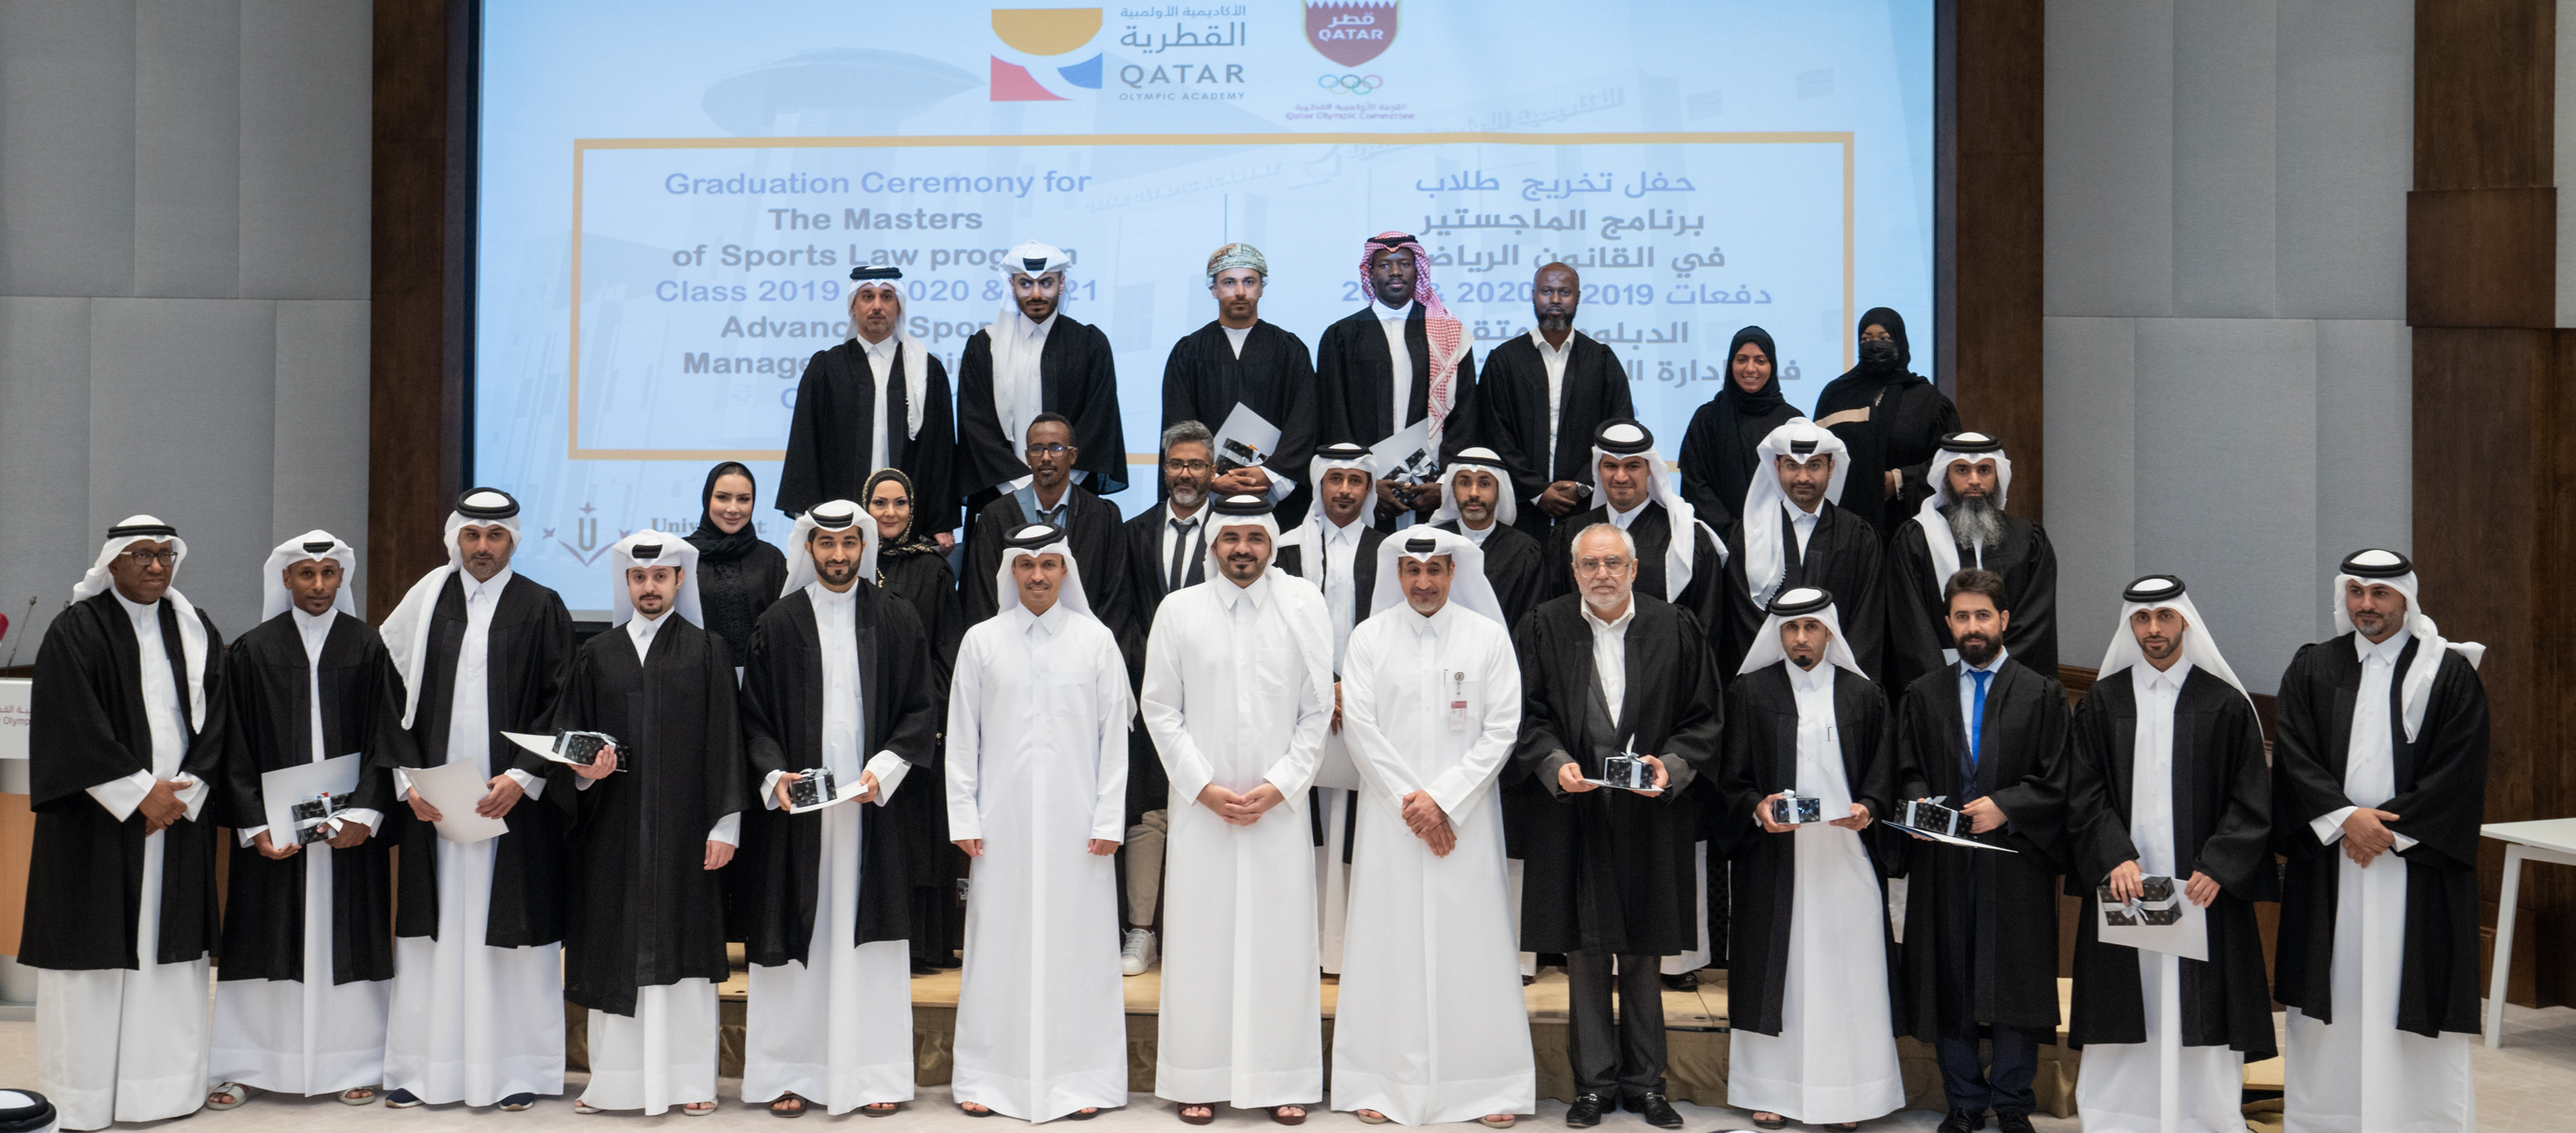 Joaan bin Hamad Al-Thani honors graduates of Masters of Sports Law and Sports Management Diploma